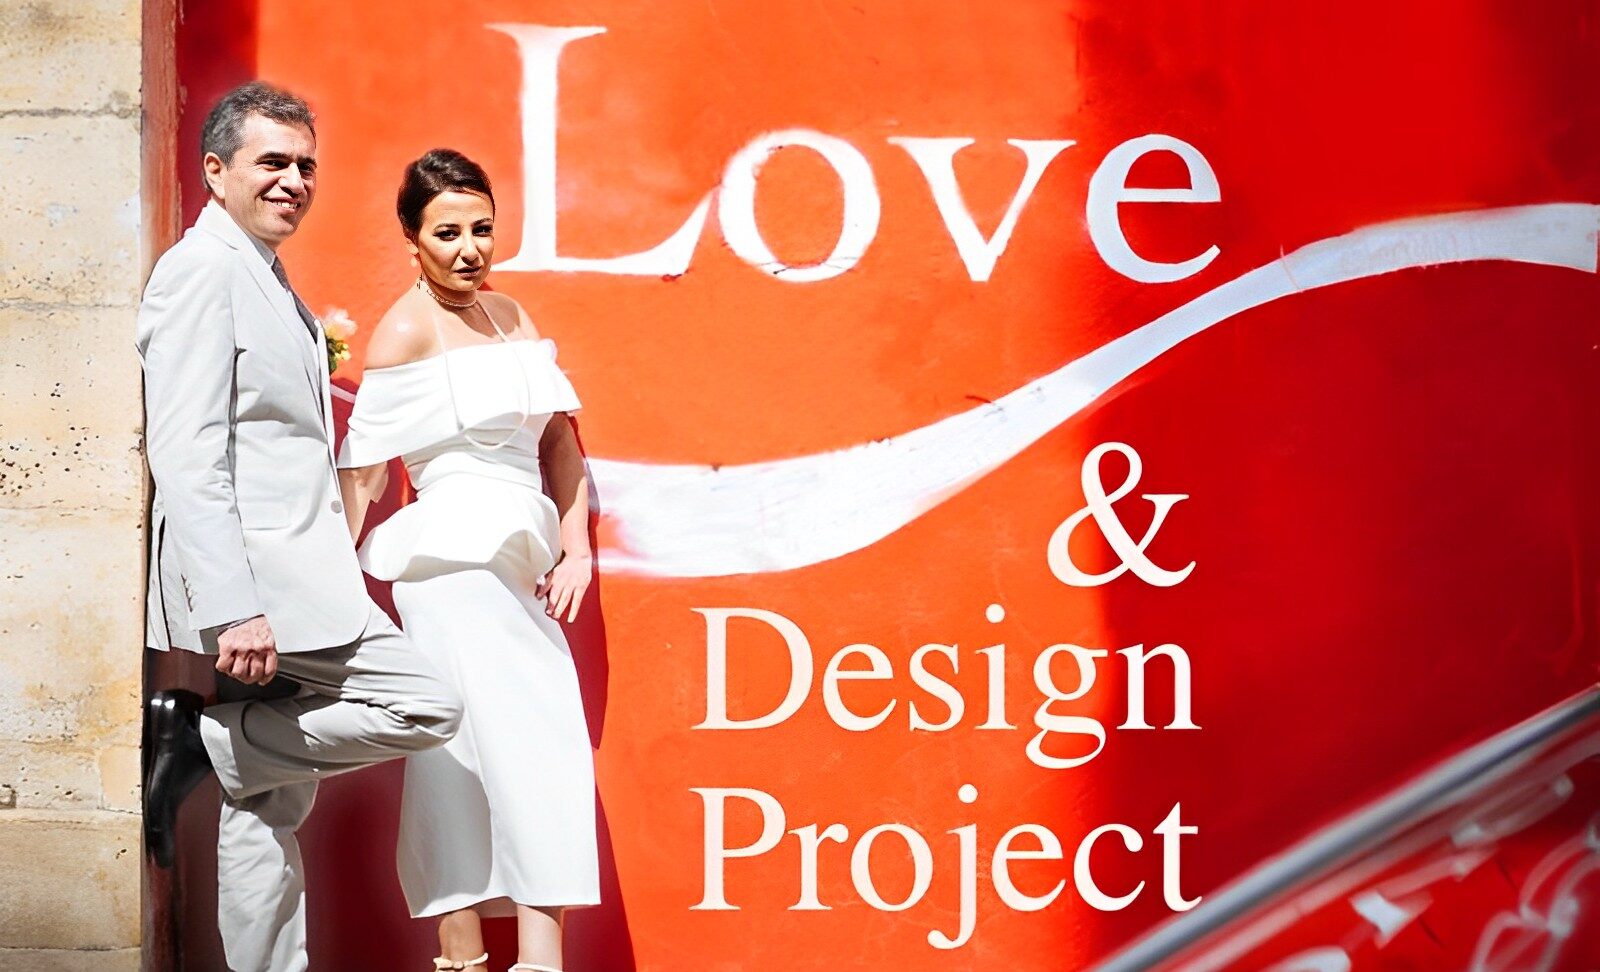 Love&DesignProject Podcast